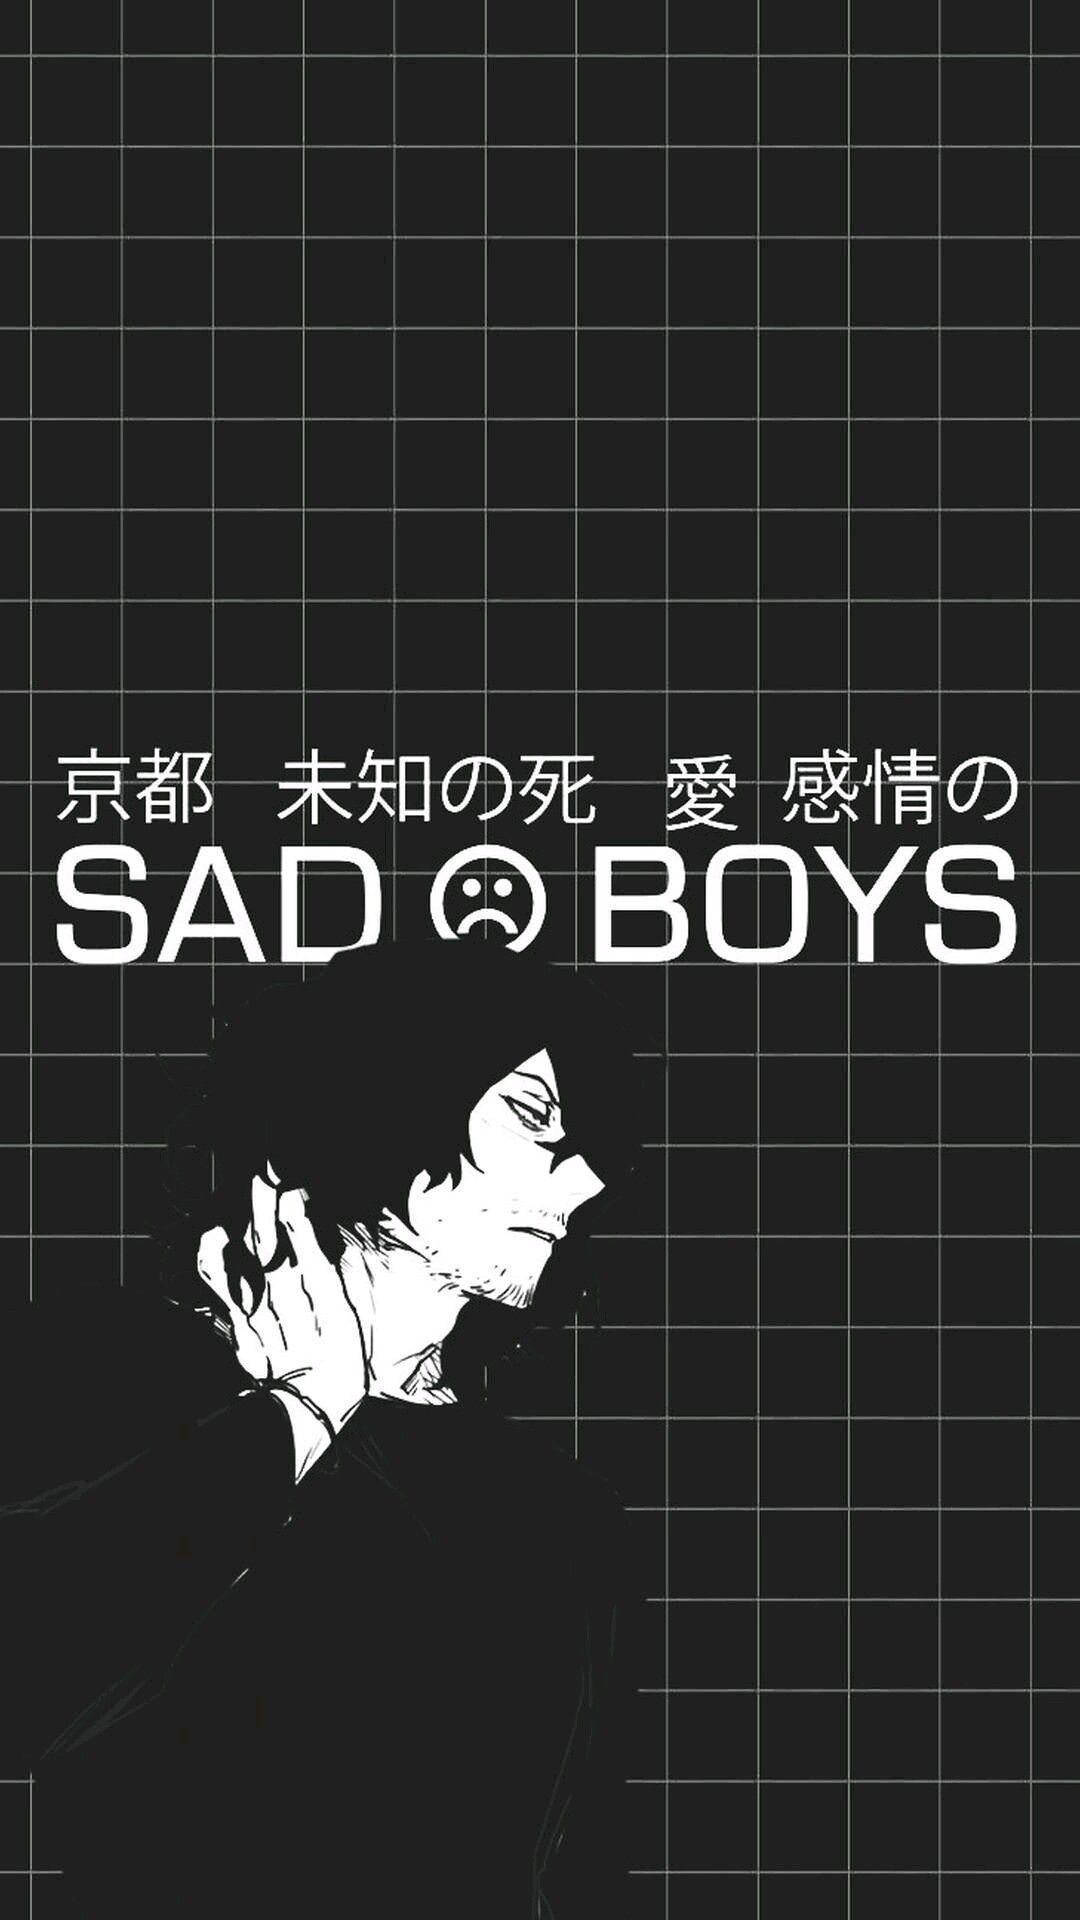 Anime Boy Sad Aesthetic Shota Aizawa Wallpaper